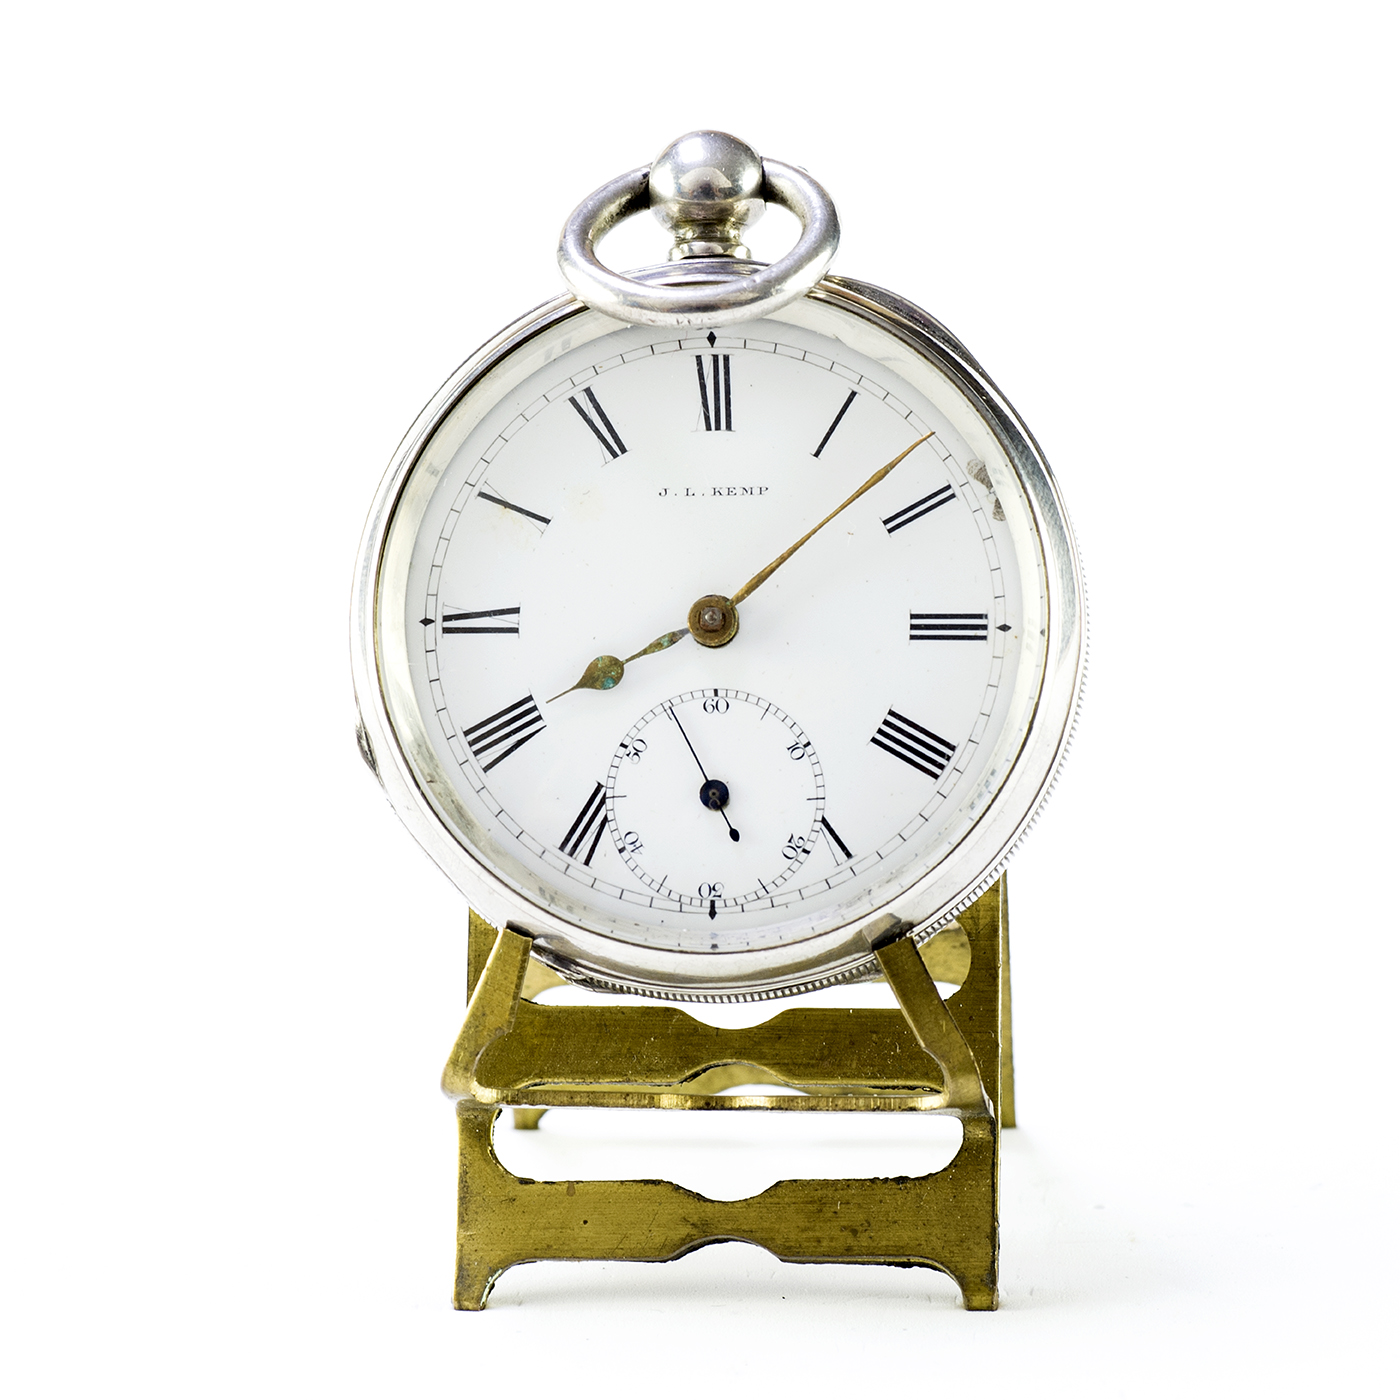 J.L. KEMP - WALTHAM. Reloj de bolsillo, lepine. Reino Unido, ca. 1885.